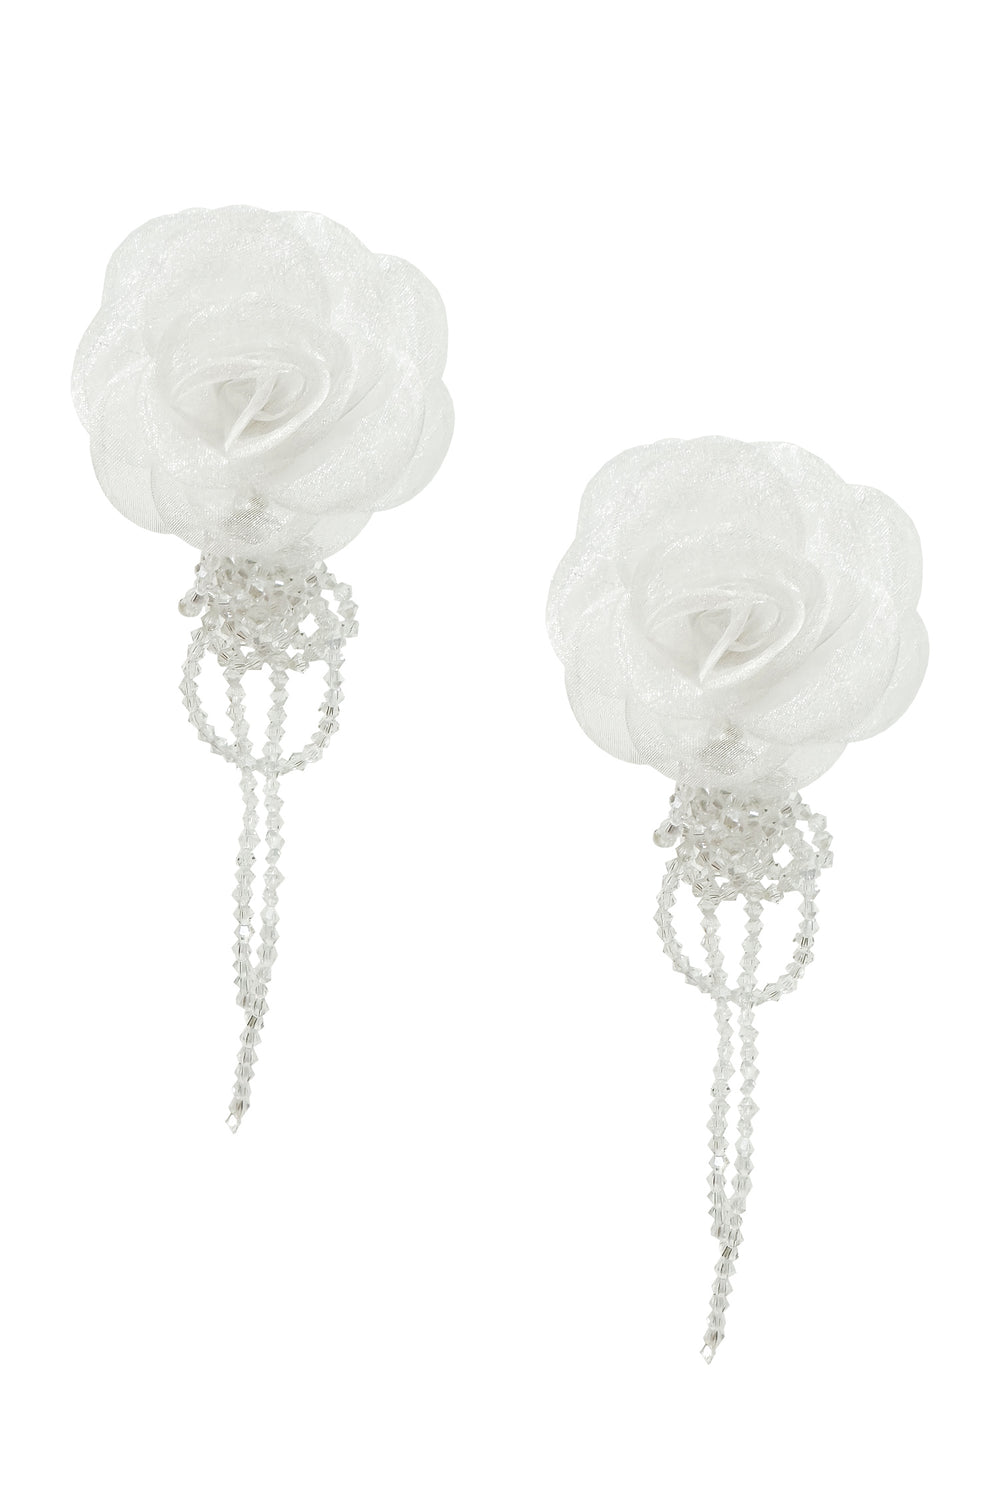 Ciana White Flower Earrings